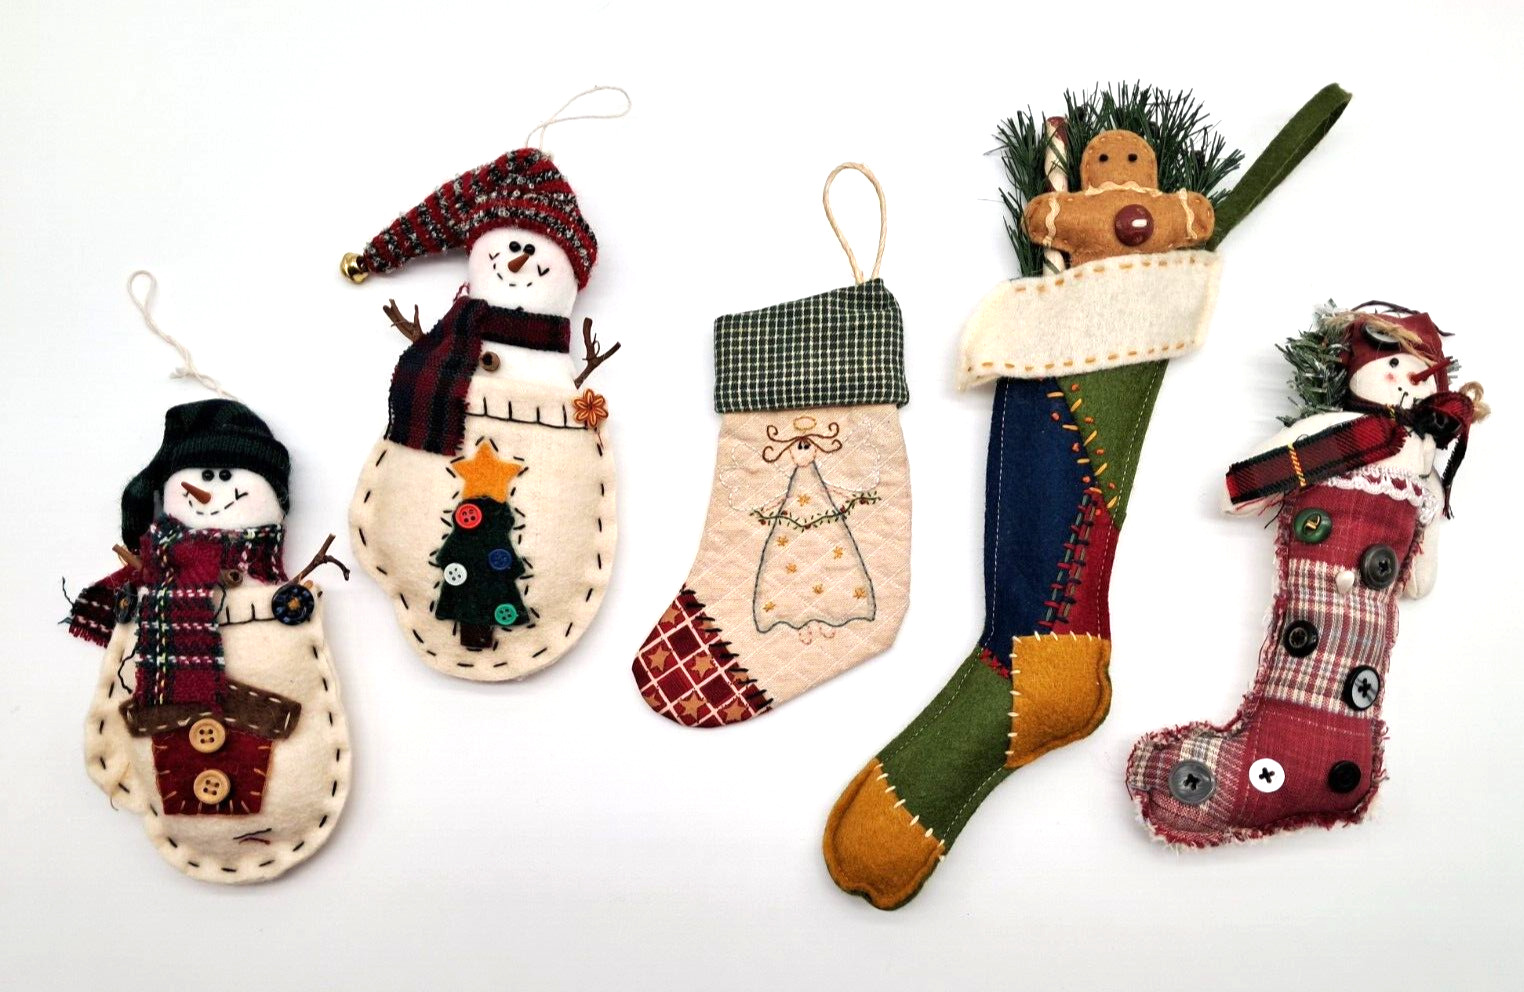 Lot of 5 Vintage Handmade Christmas Ornaments granny core snowman stockings